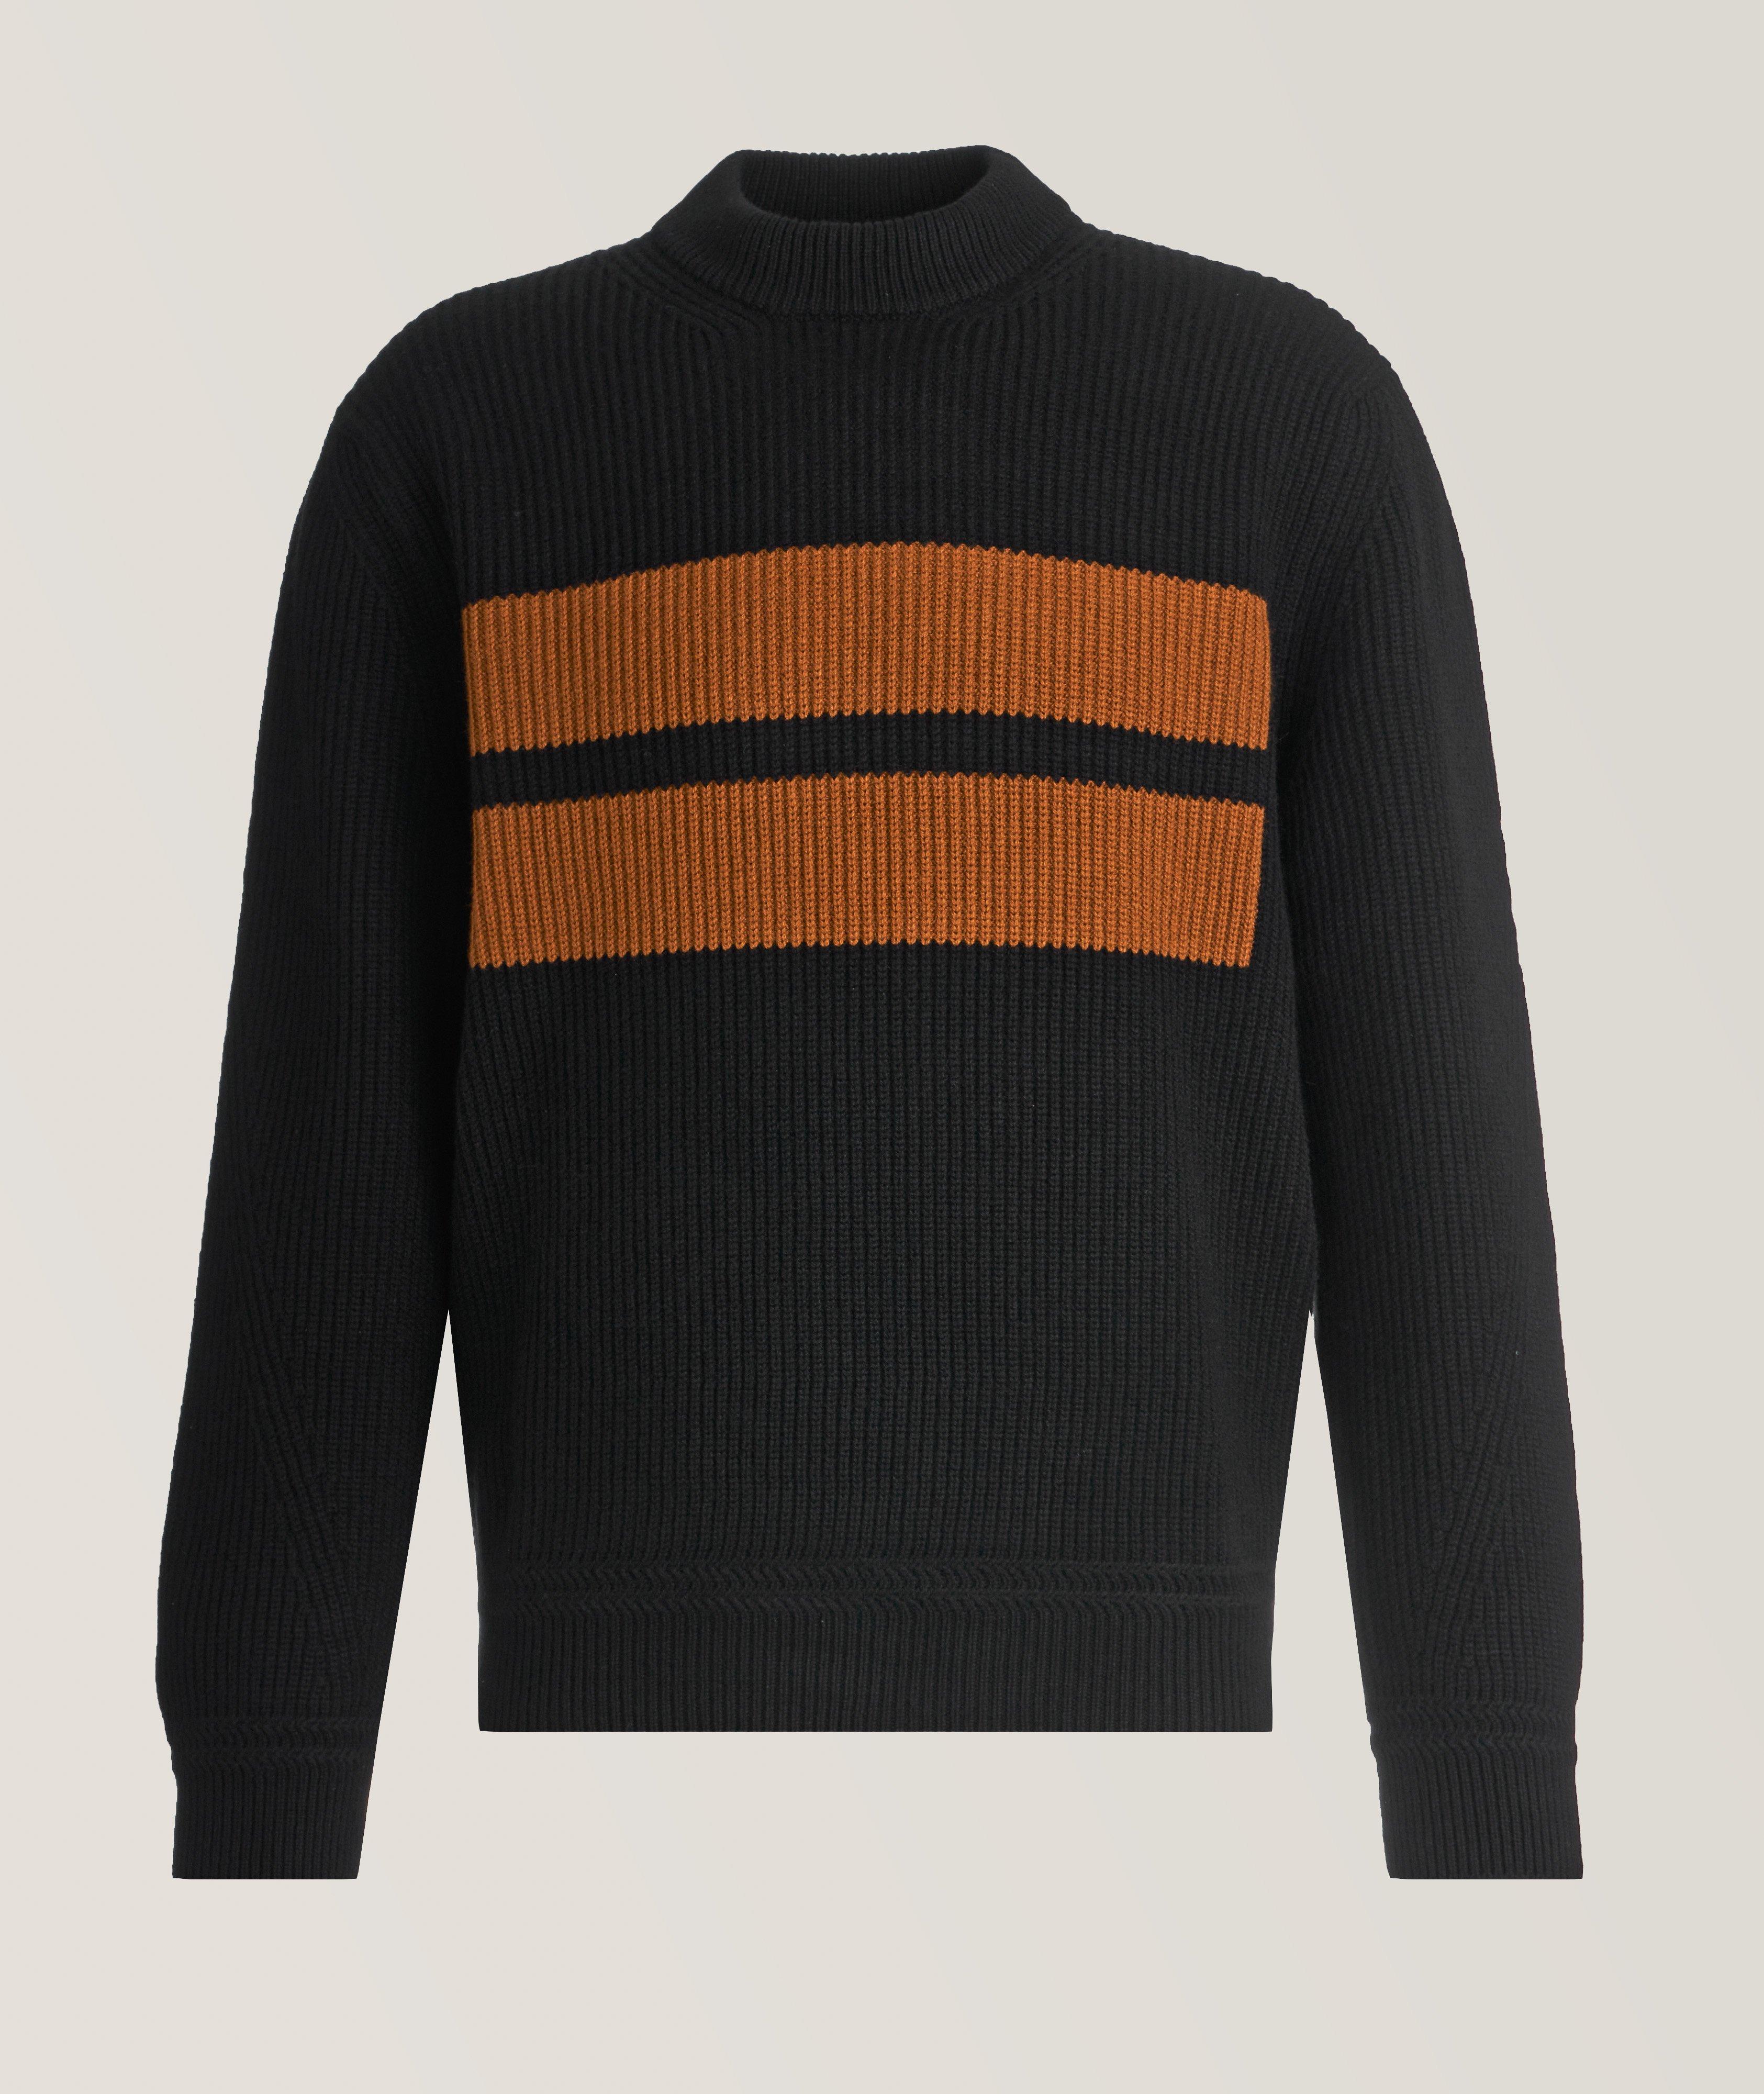 Bold Striped Oasi Cashmere Knit Sweater image 0